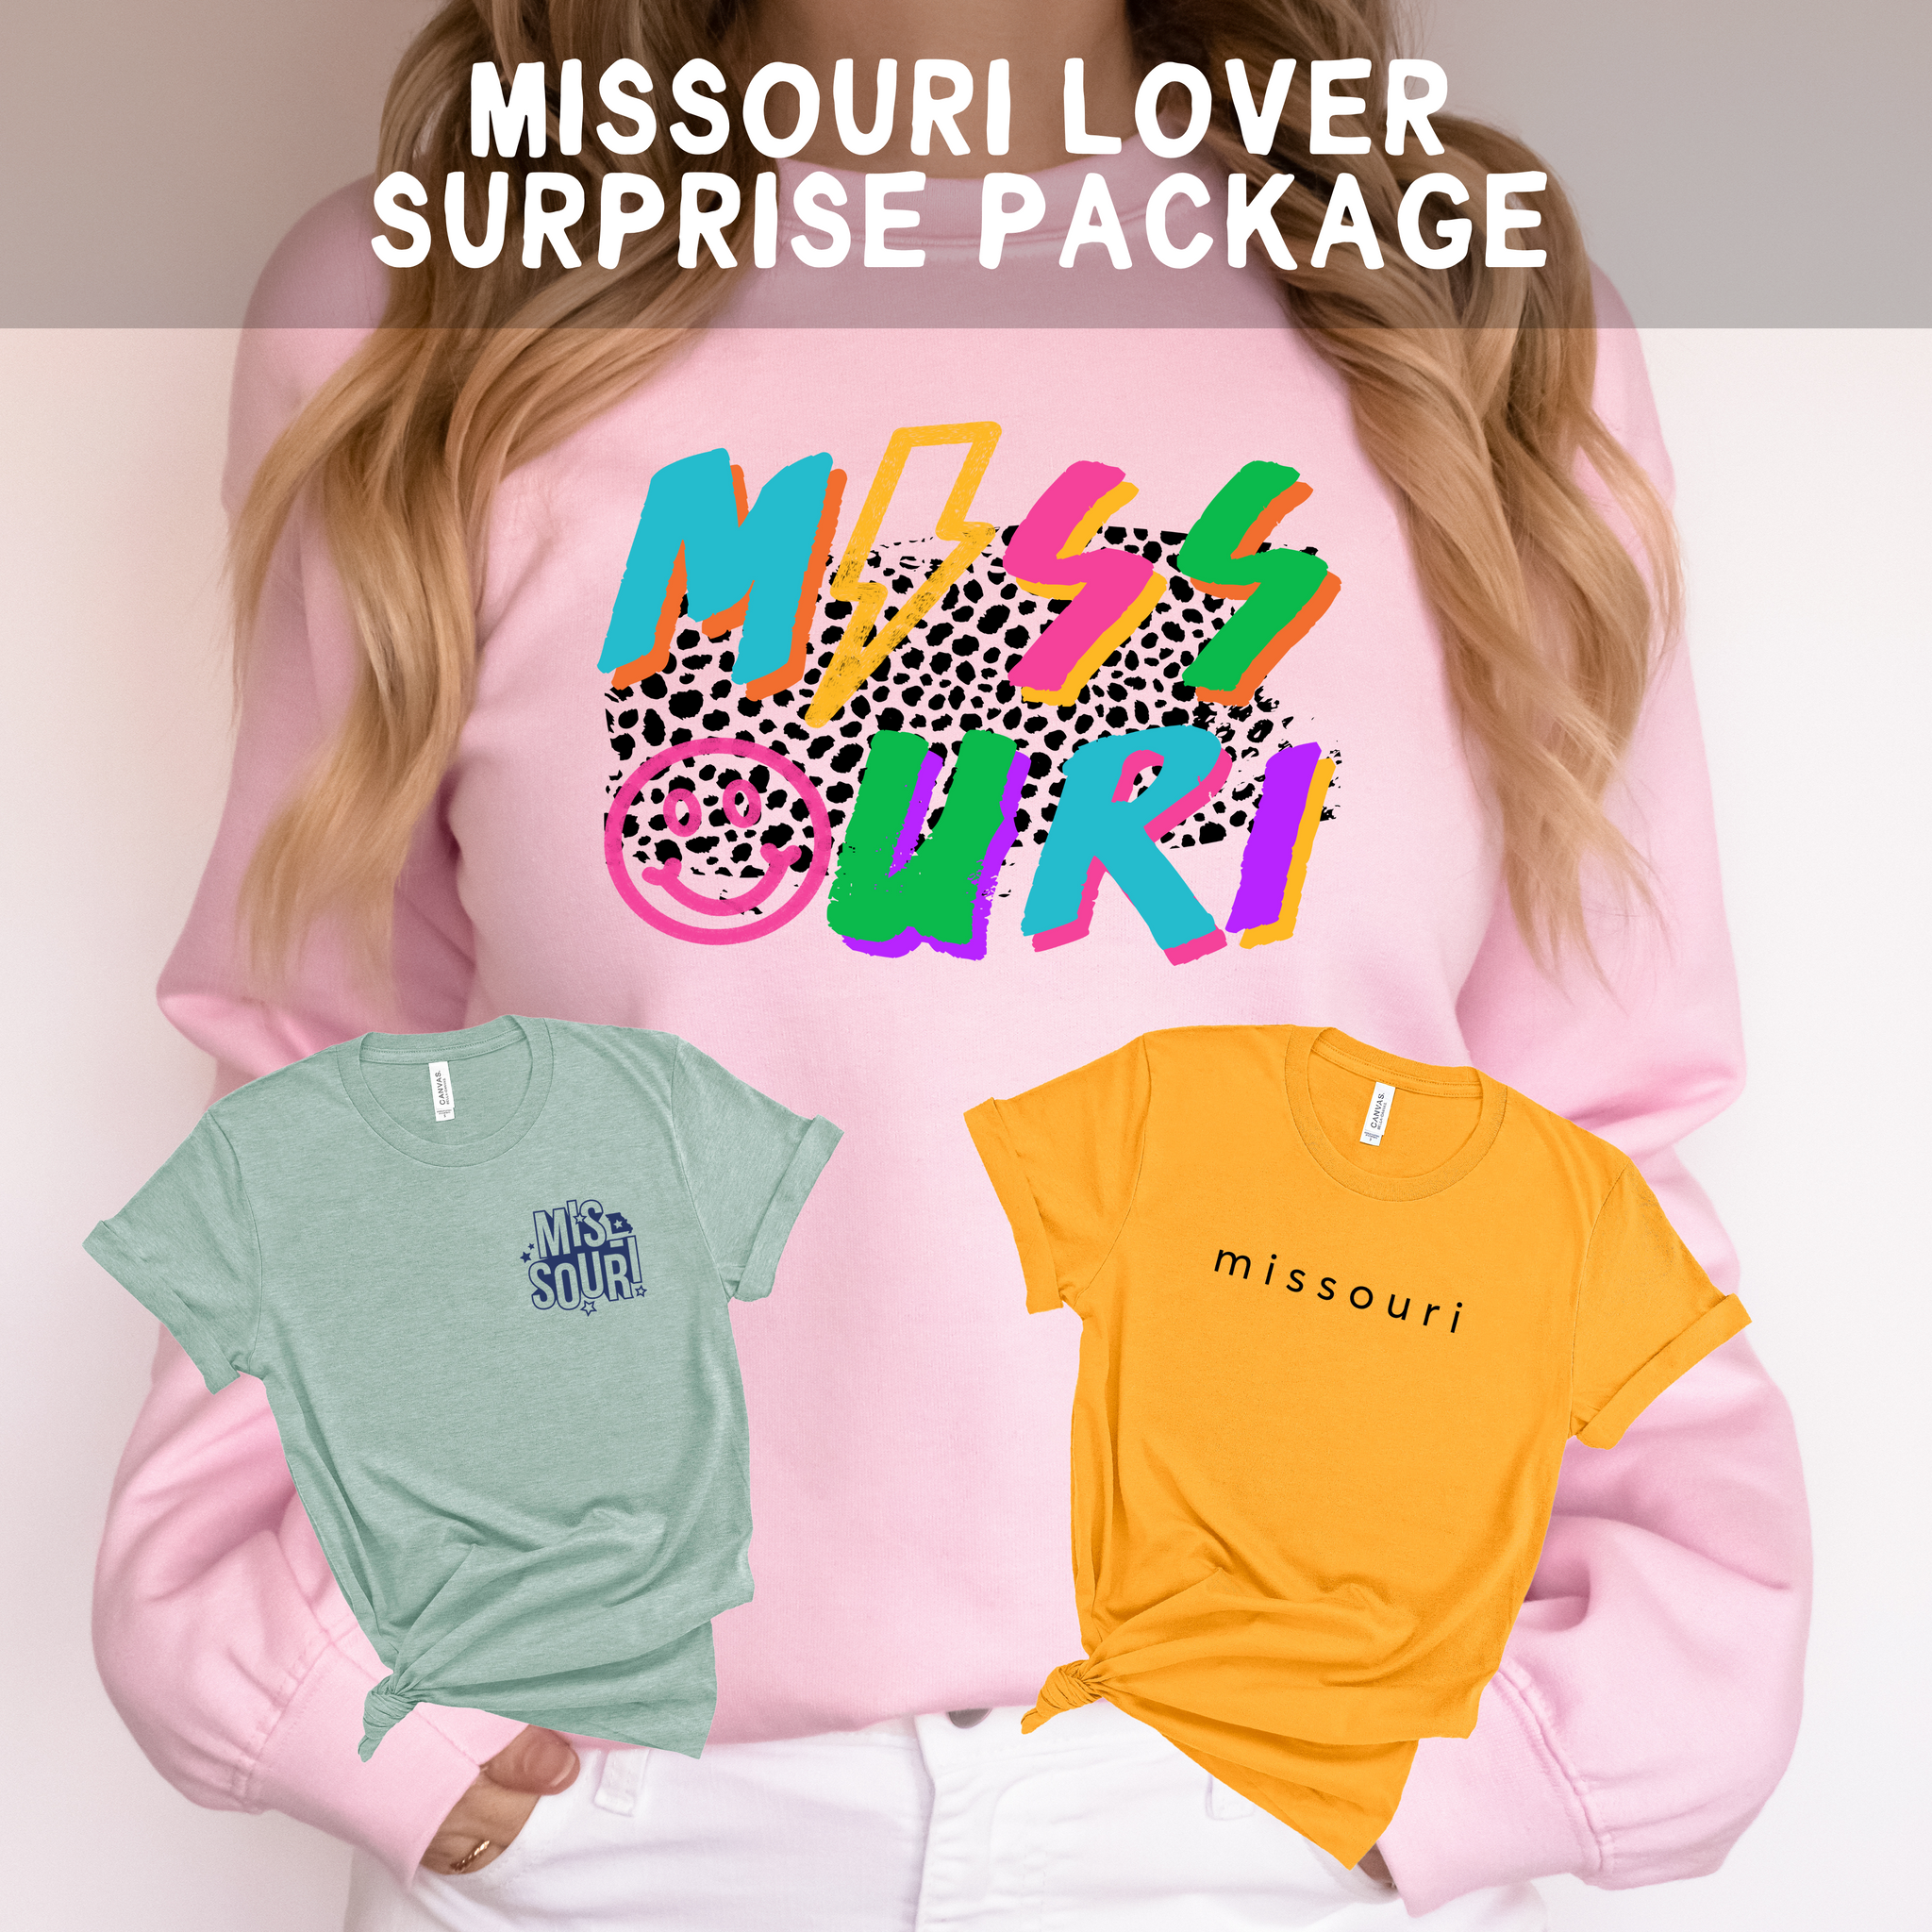 Missouri Lover Surprise Package